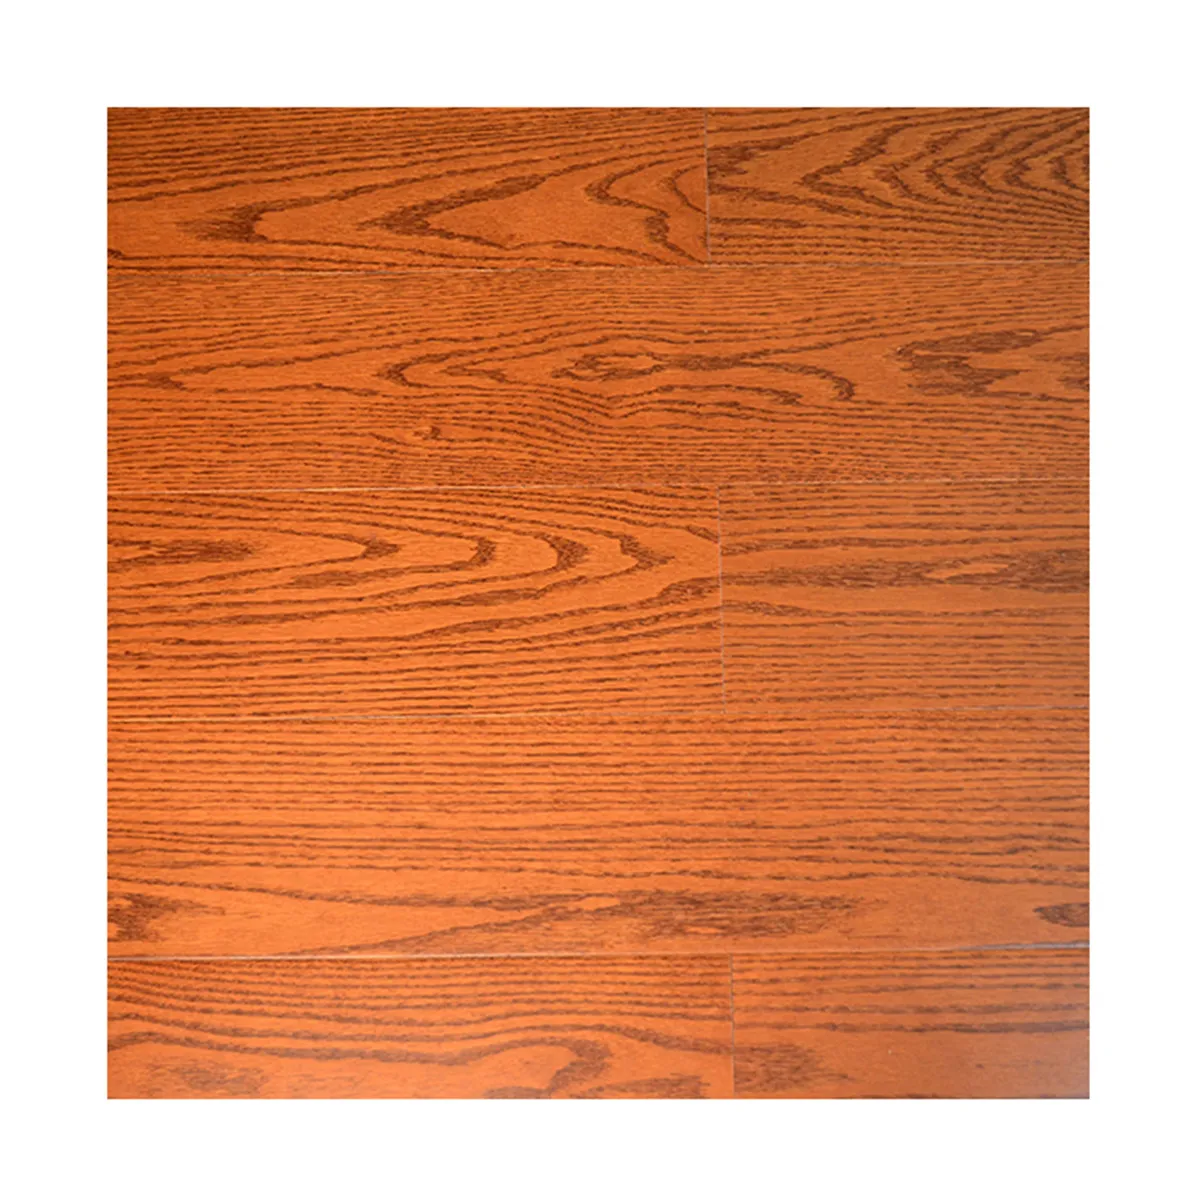 Lantai inovasi baru lantai kayu Rusia kayu oak papan 3 lapis lantai kayu alami